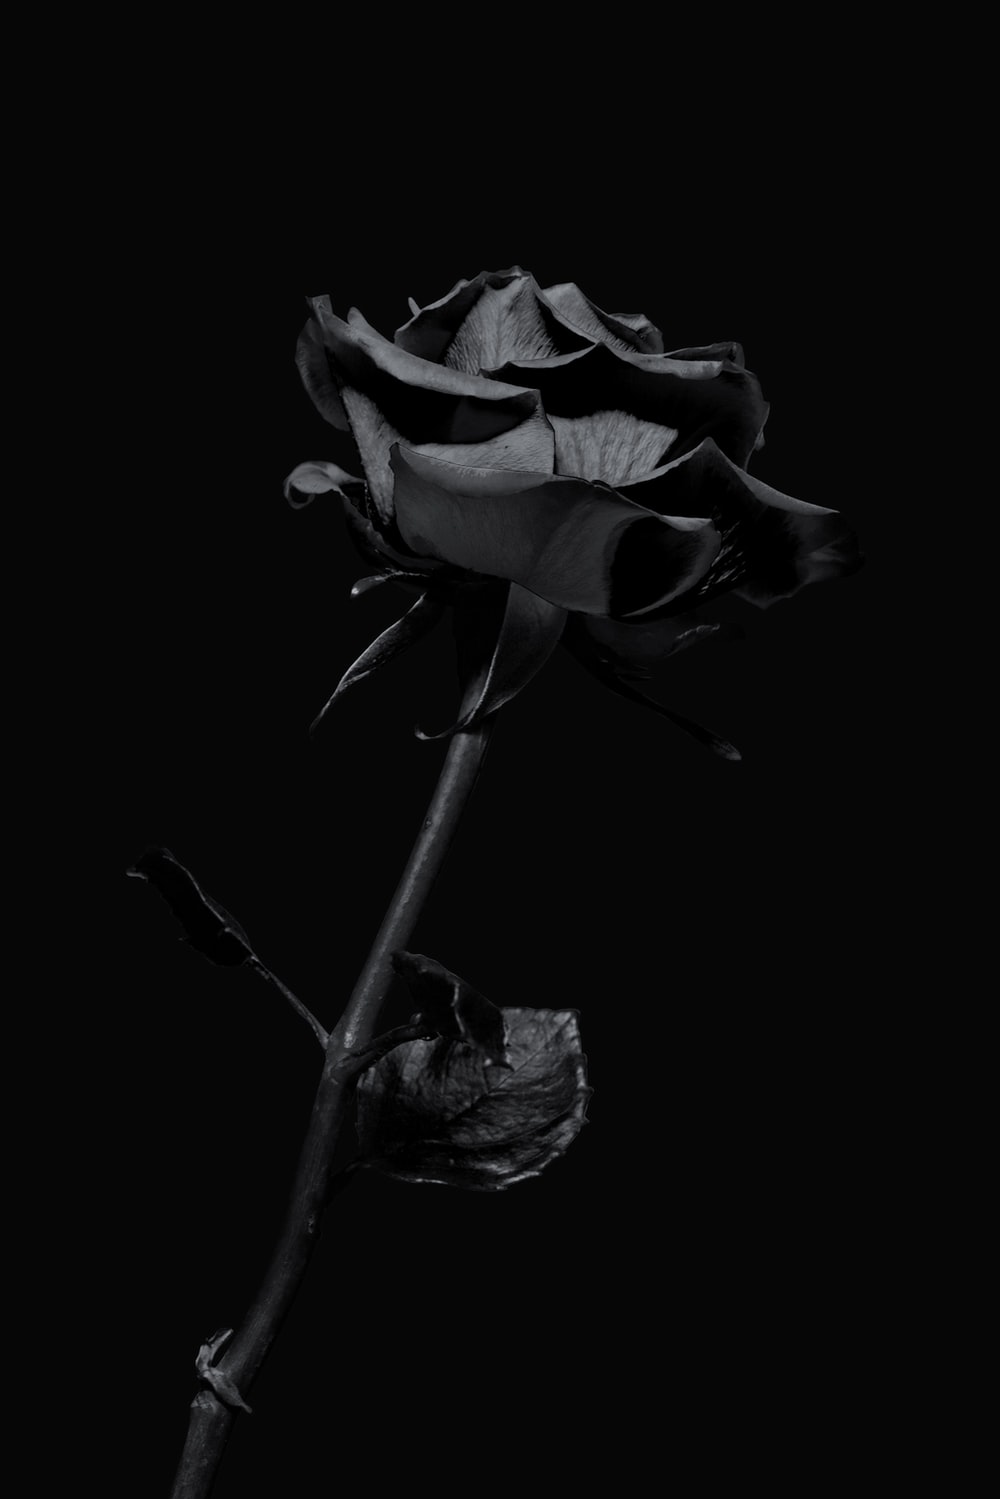 Dark Rose Picture. Download Free Image